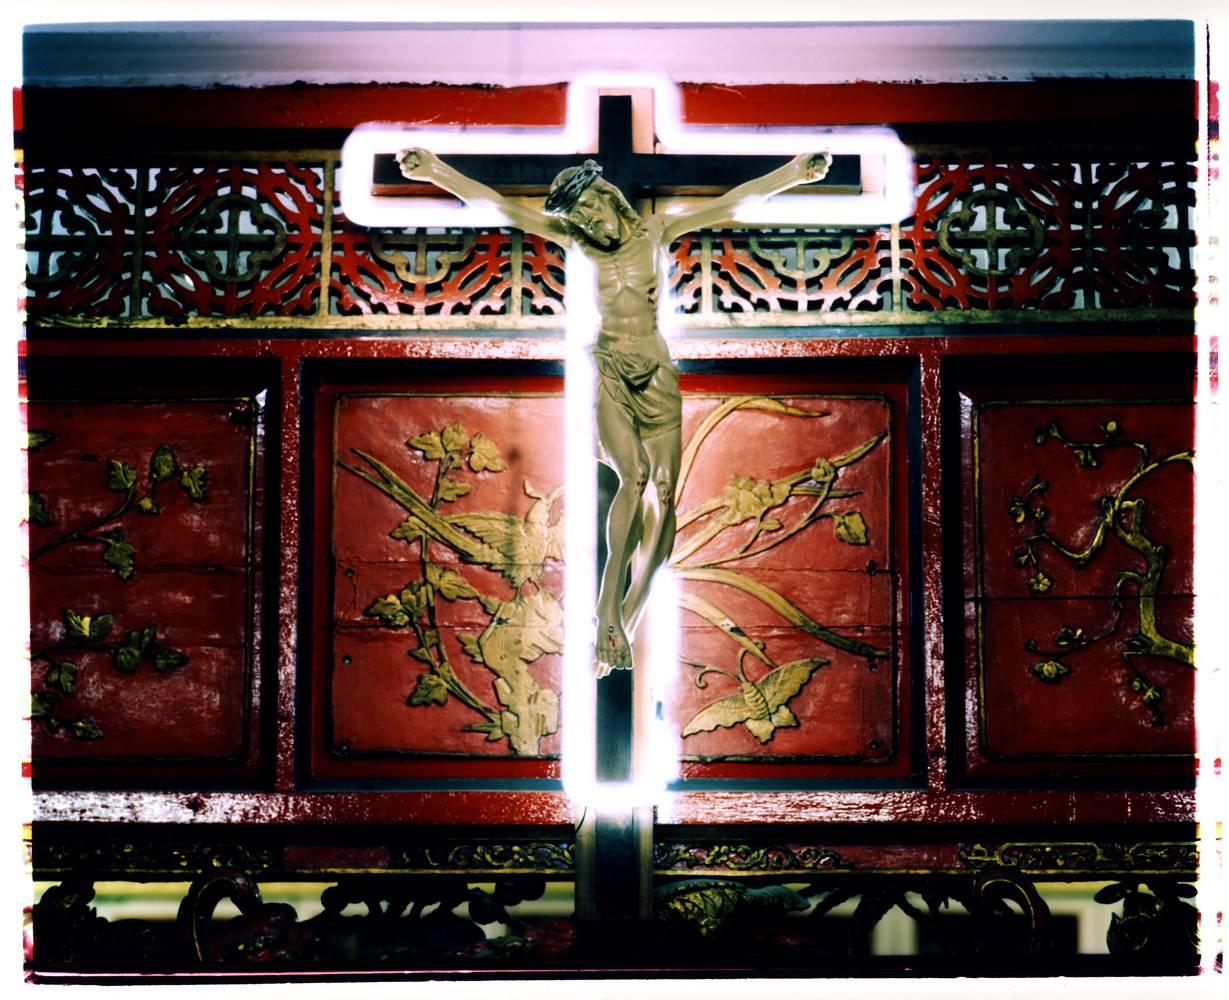 Richard Heeps Color Photograph - Neon Cross, Ho Chi Minh City (Saigon) - Religious kitsch color photography